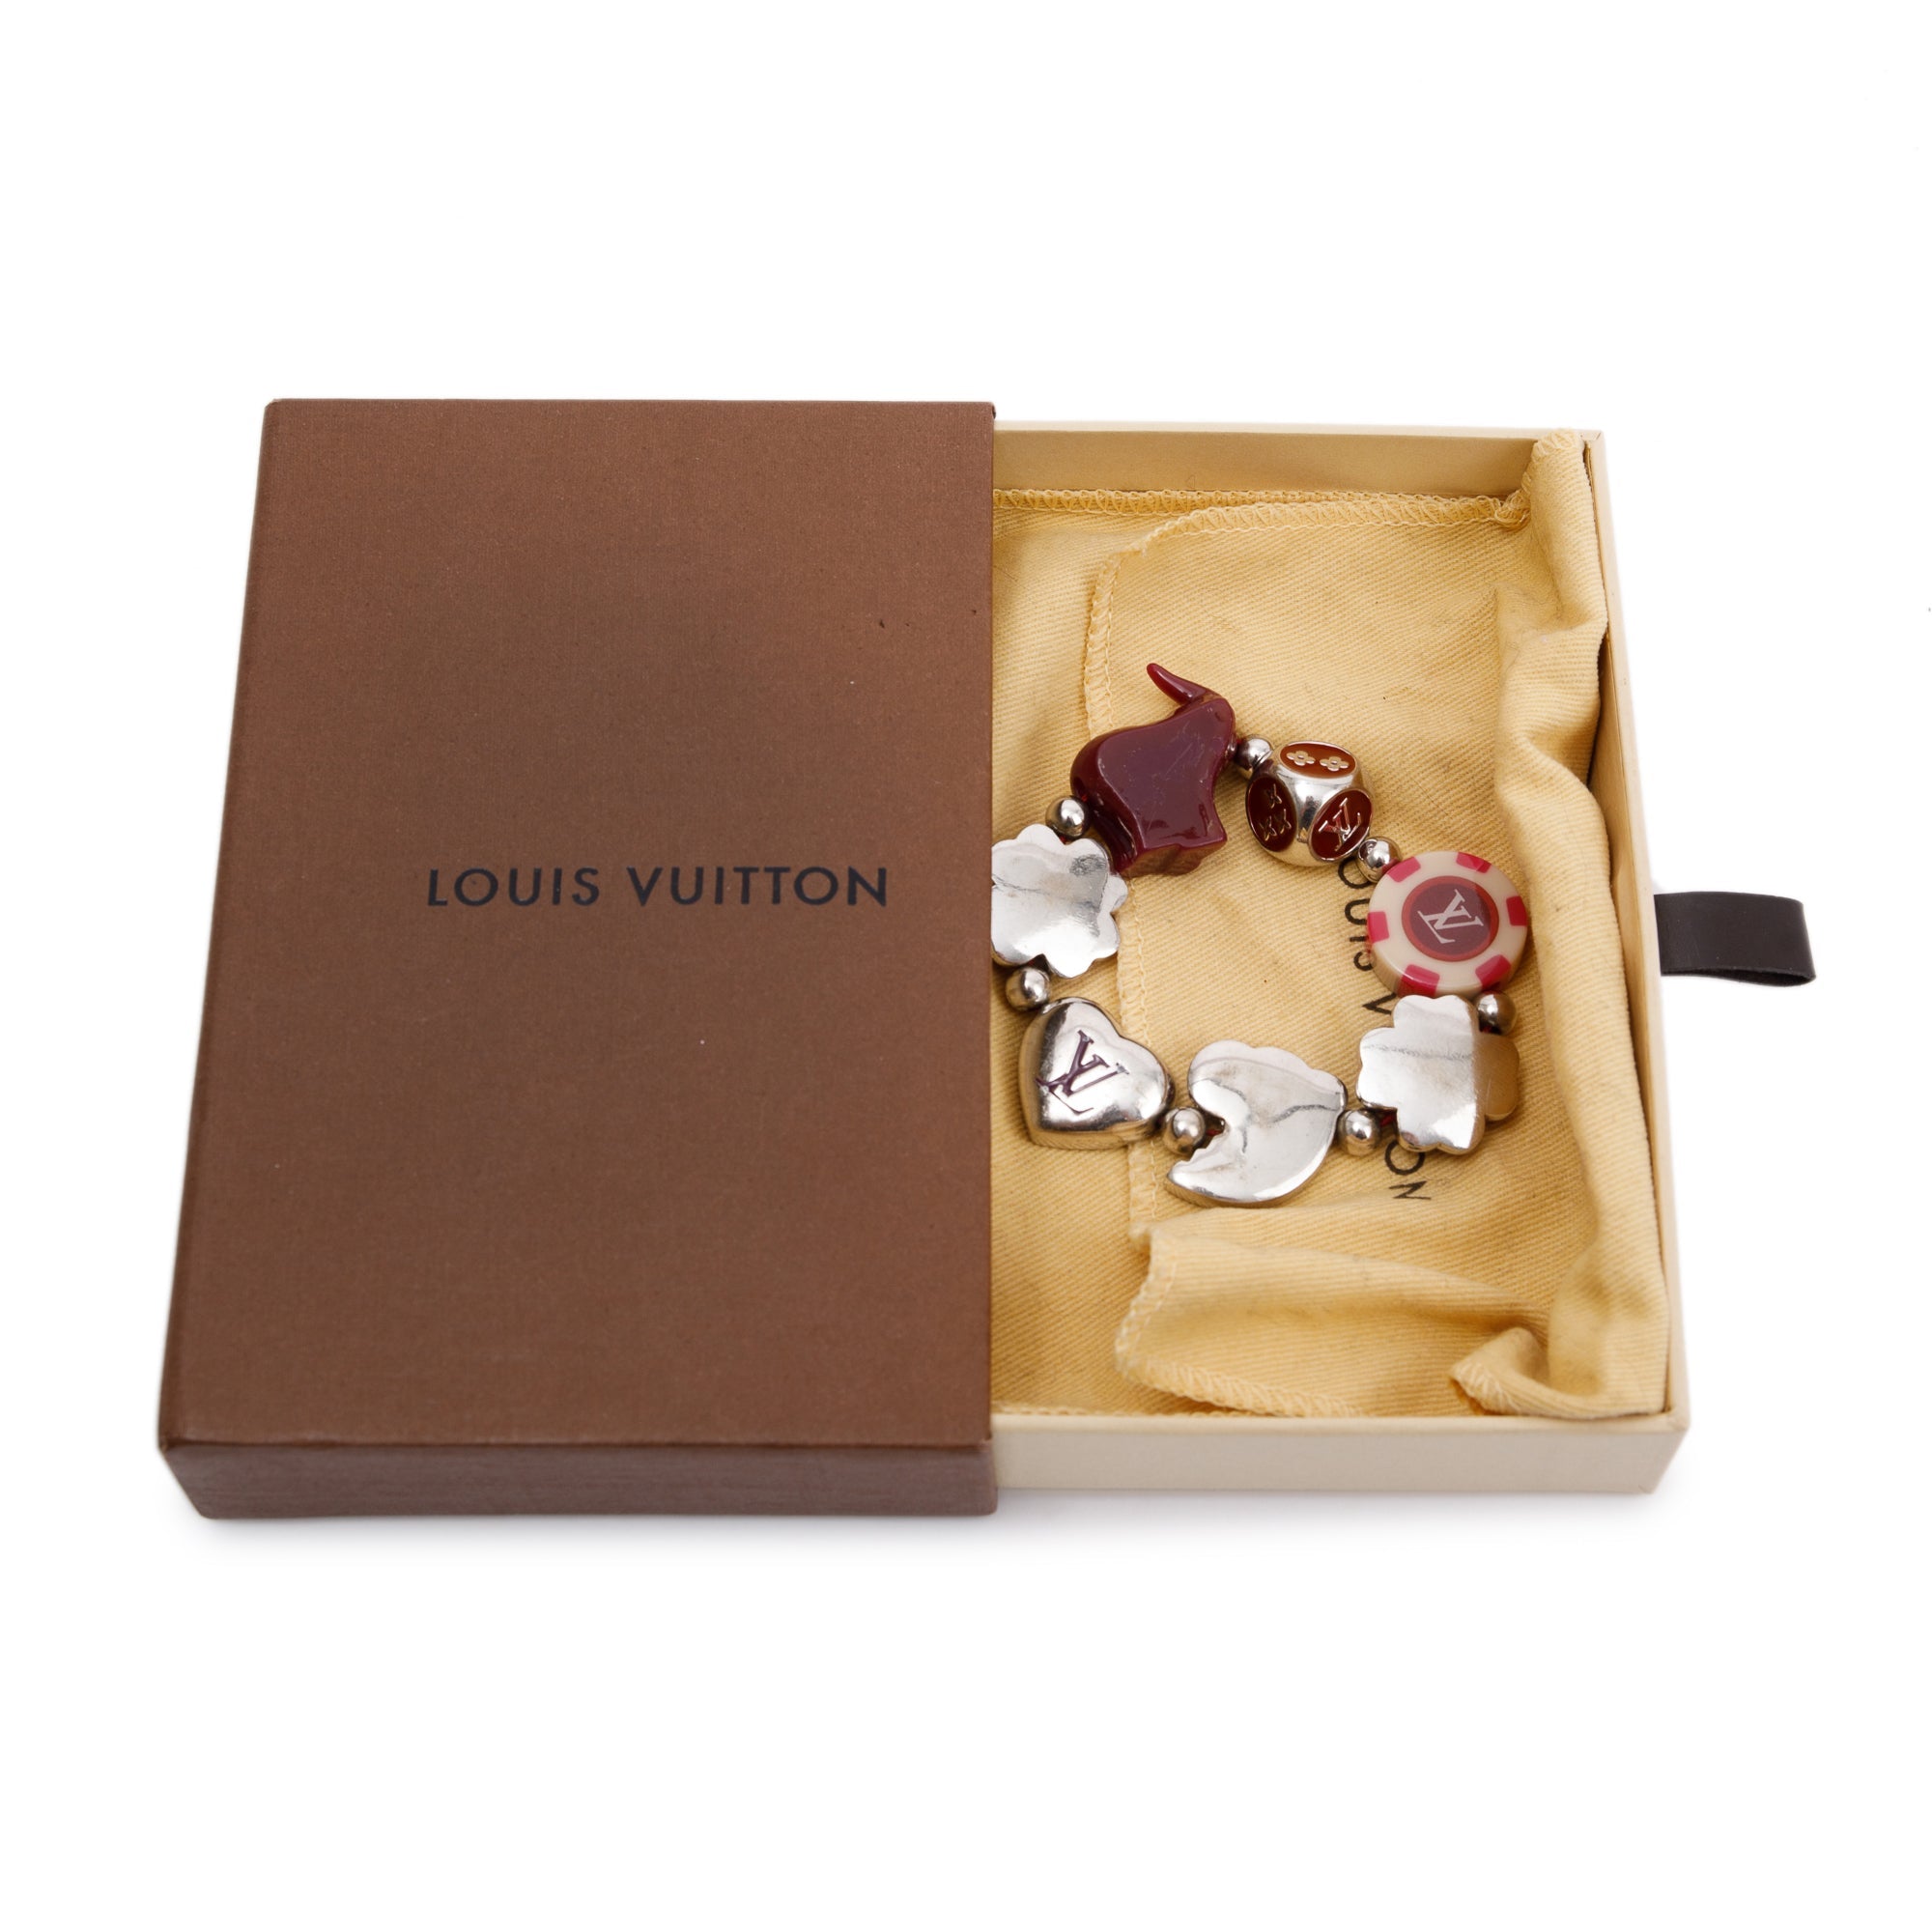 In LVoe with Louis Vuitton: Louis Vuitton Tutti Lucky Bracelet